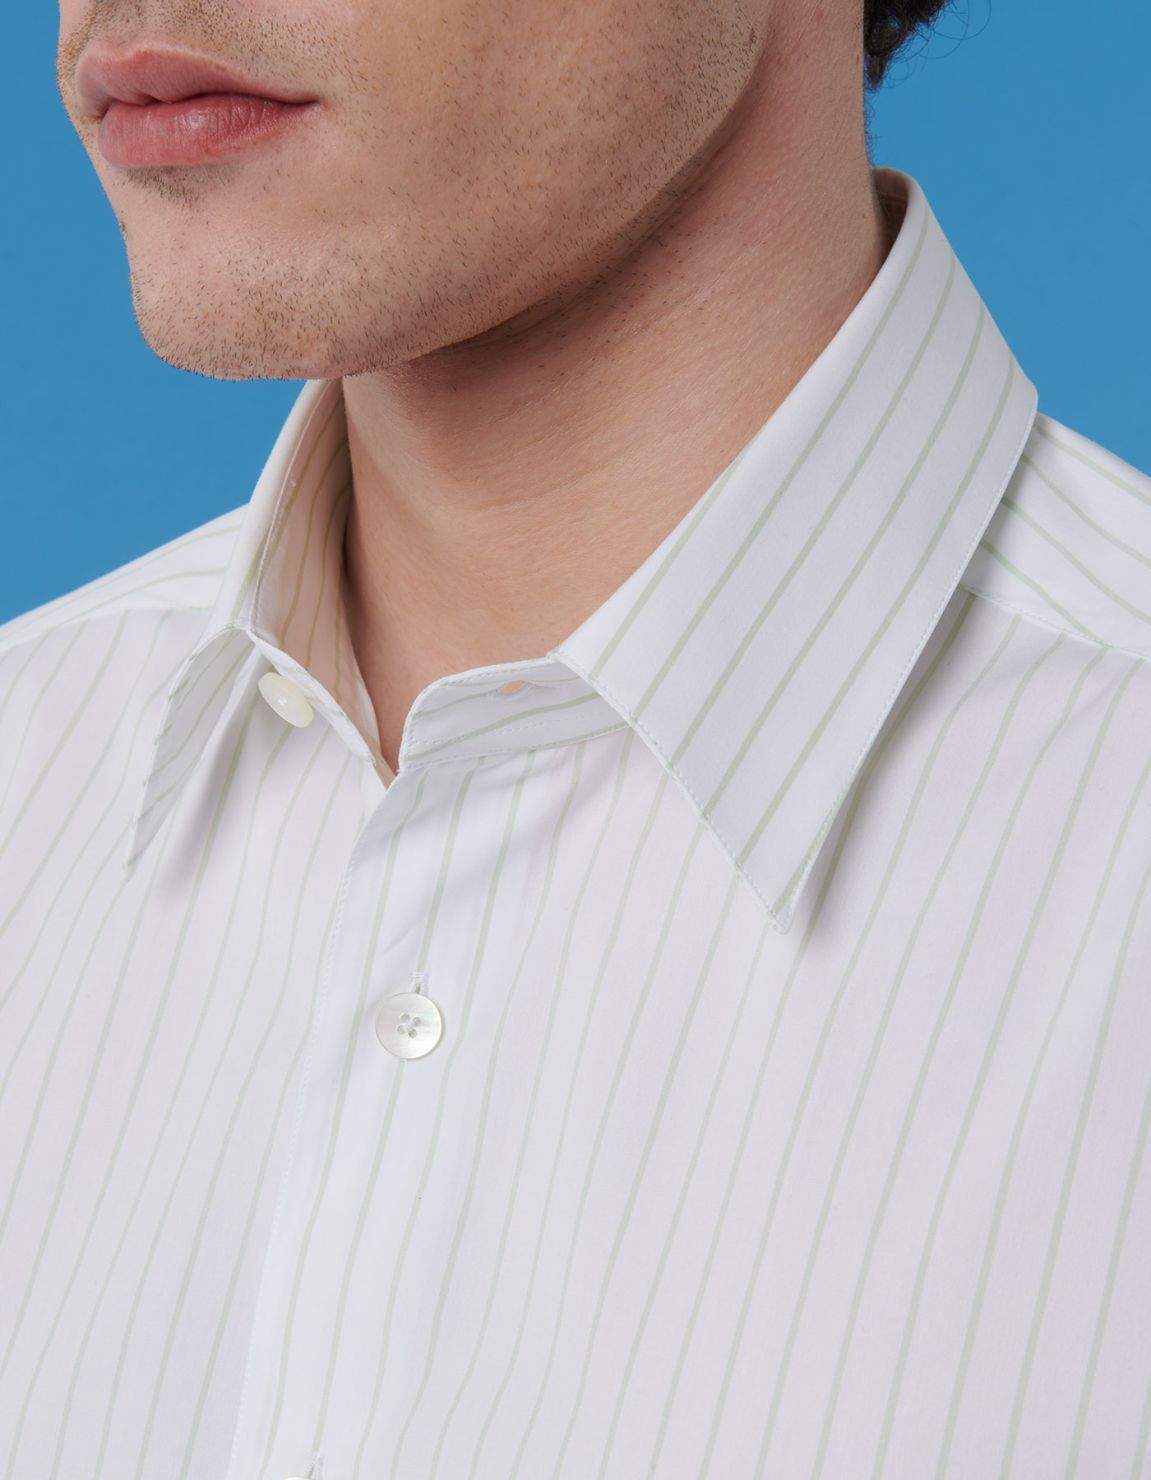 Pale Pink Poplin Stripe Shirt Collar spread Evolution Classic Fit 2